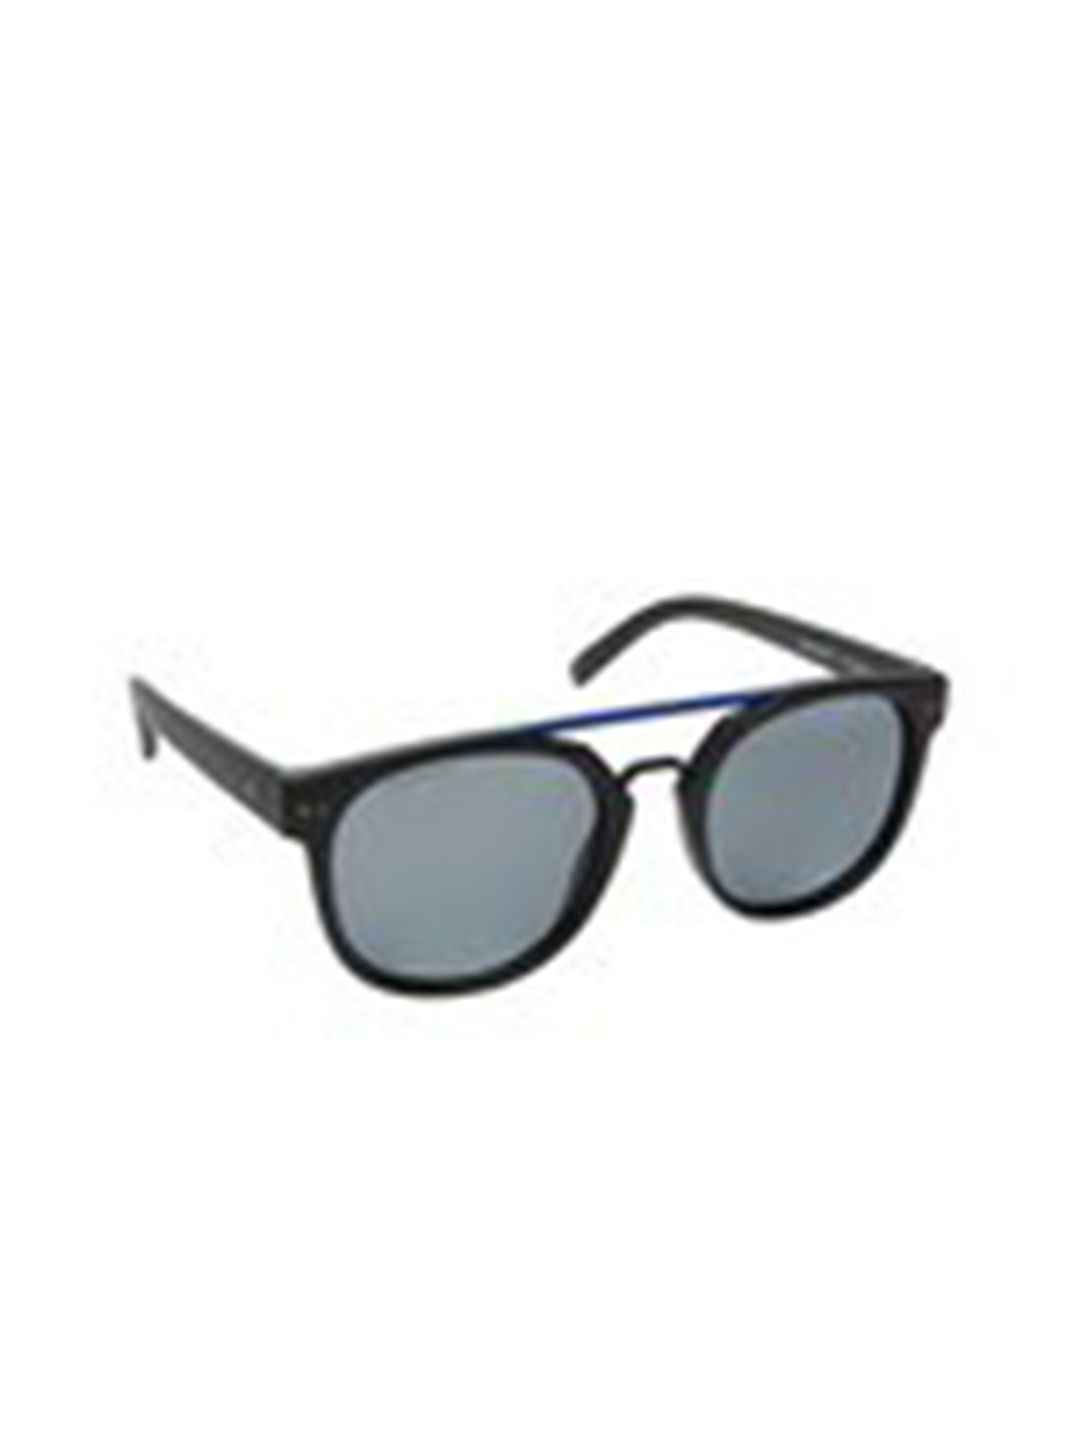 Fastrack Unisex Black Lens & Black Aviator Sunglasses with UV Protected Lens Price in India